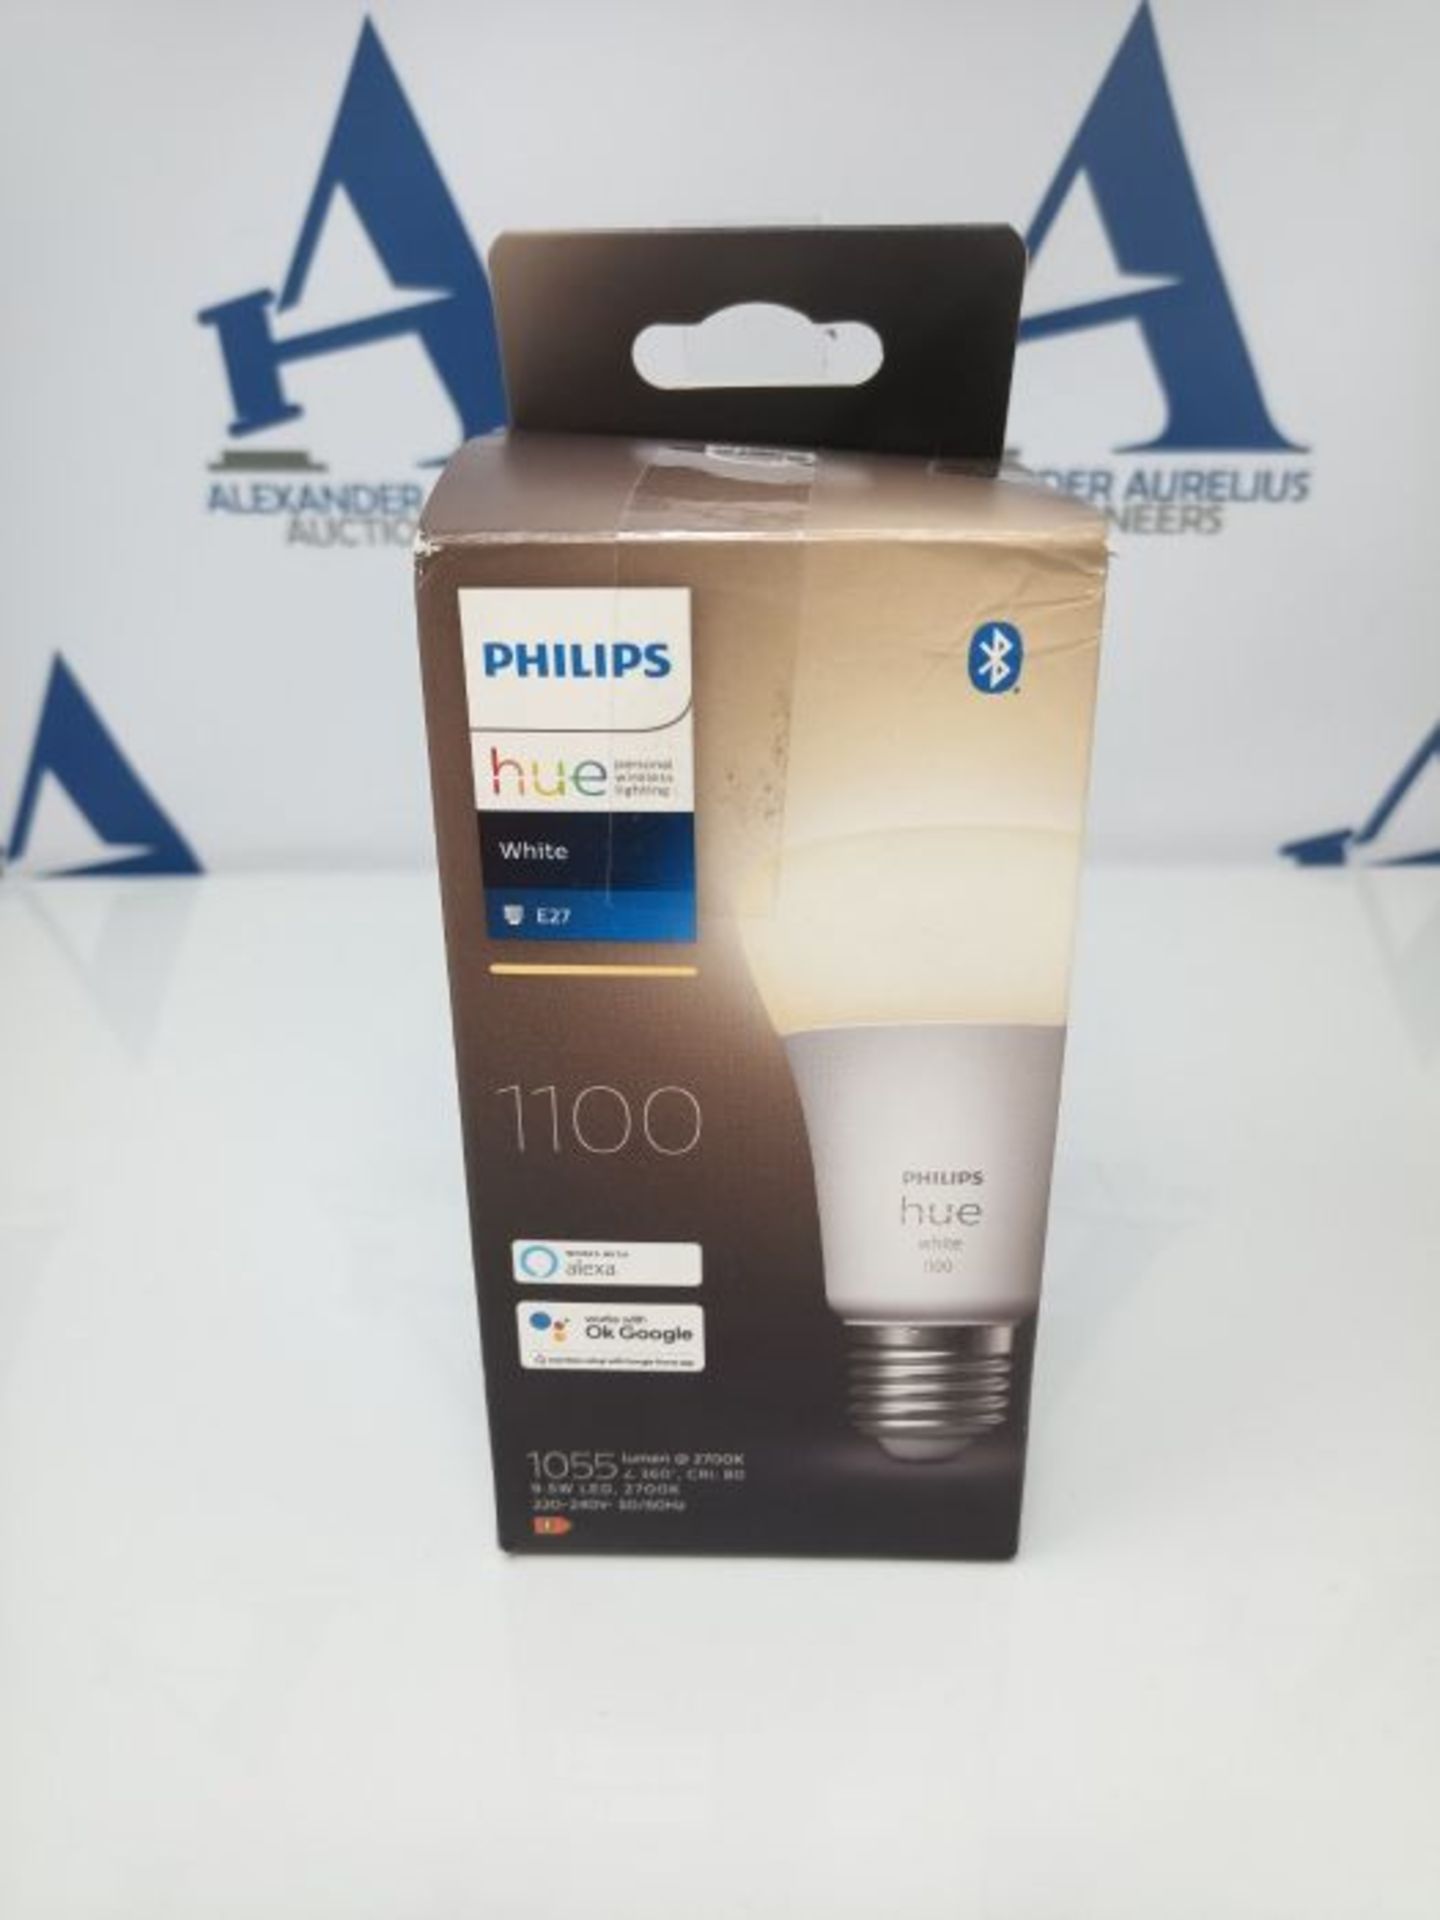 Philips Hue White Lampadina LED Smart, con Bluetooth, E27, 9.5W, Dimmerabile, 1100 Lum - Image 2 of 3